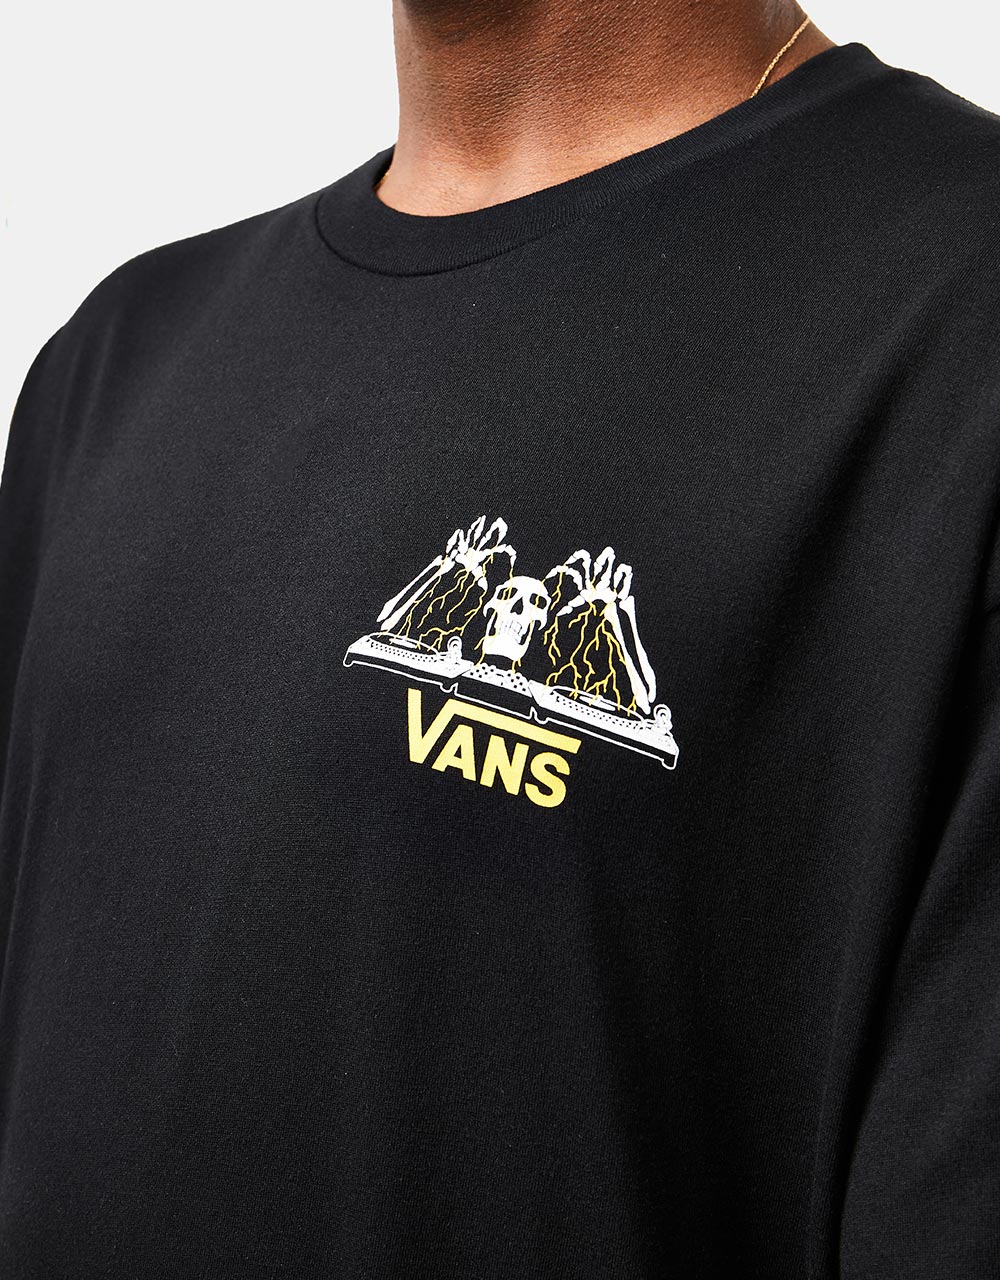 Vans Sounds From Below T-Shirt - Black